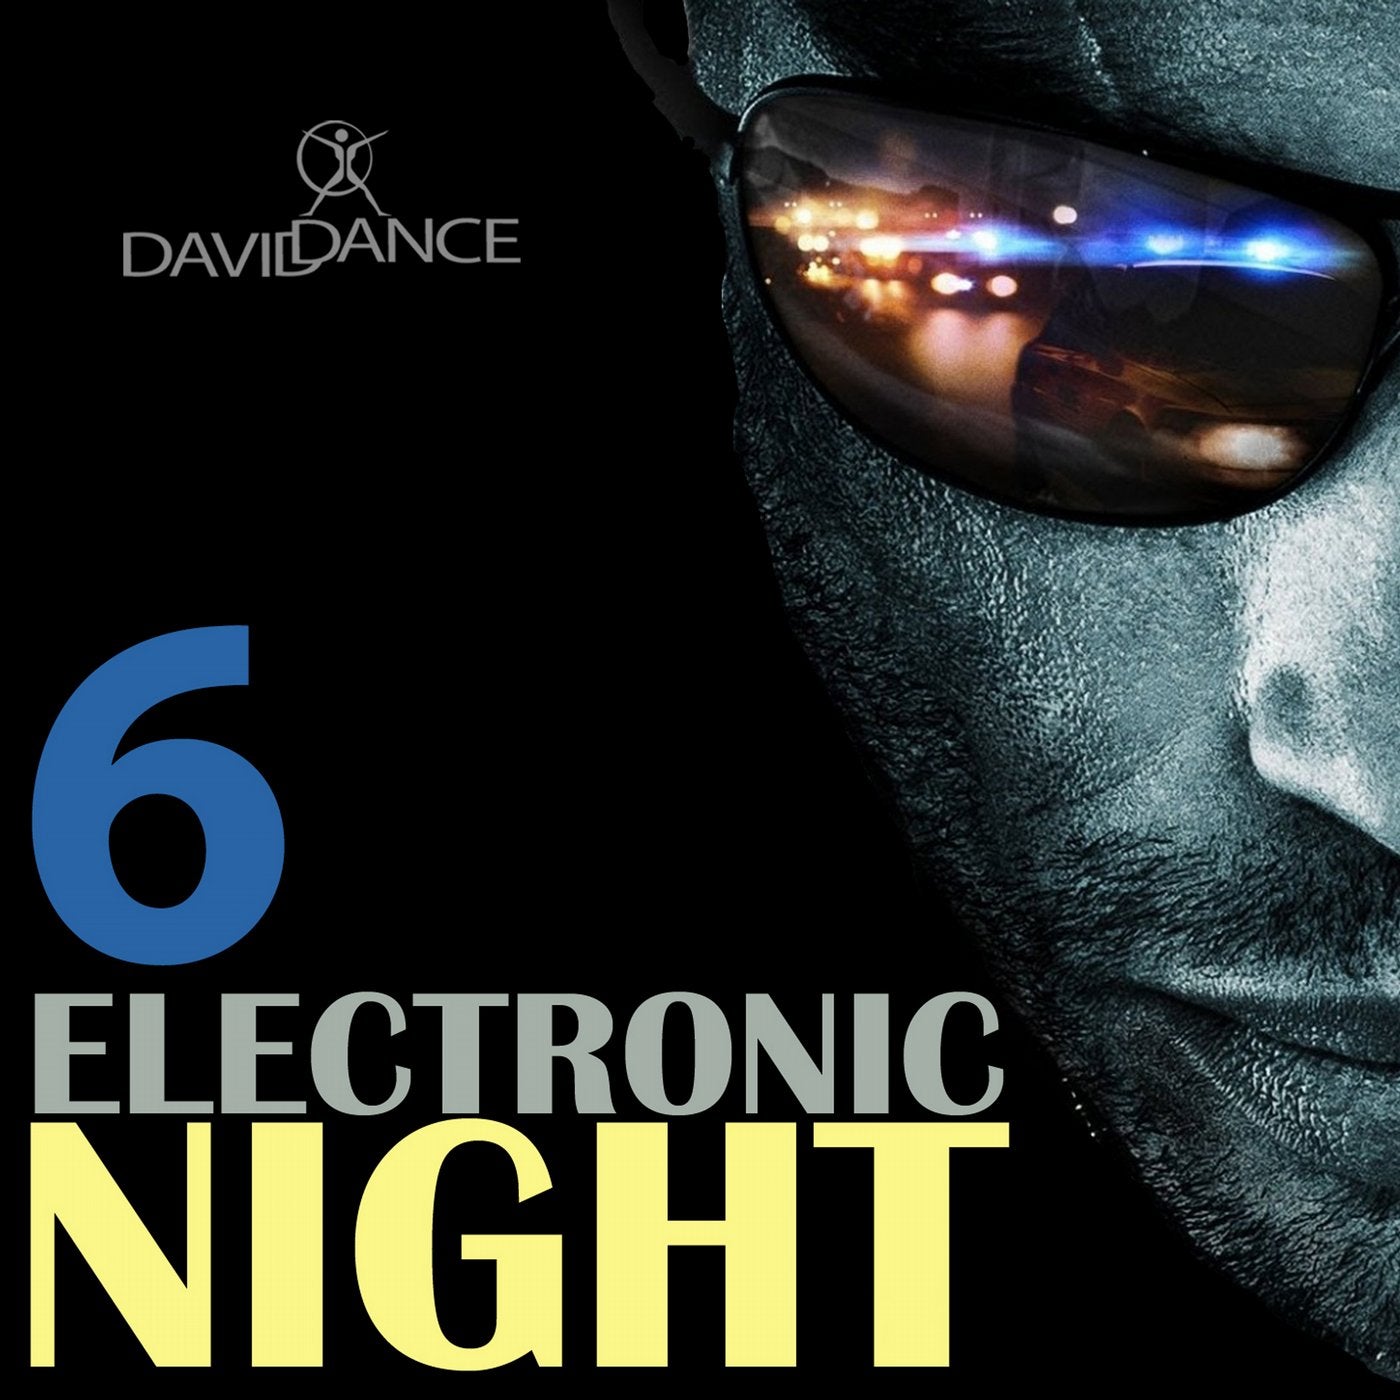 ELECTRONIC NIGHT 6